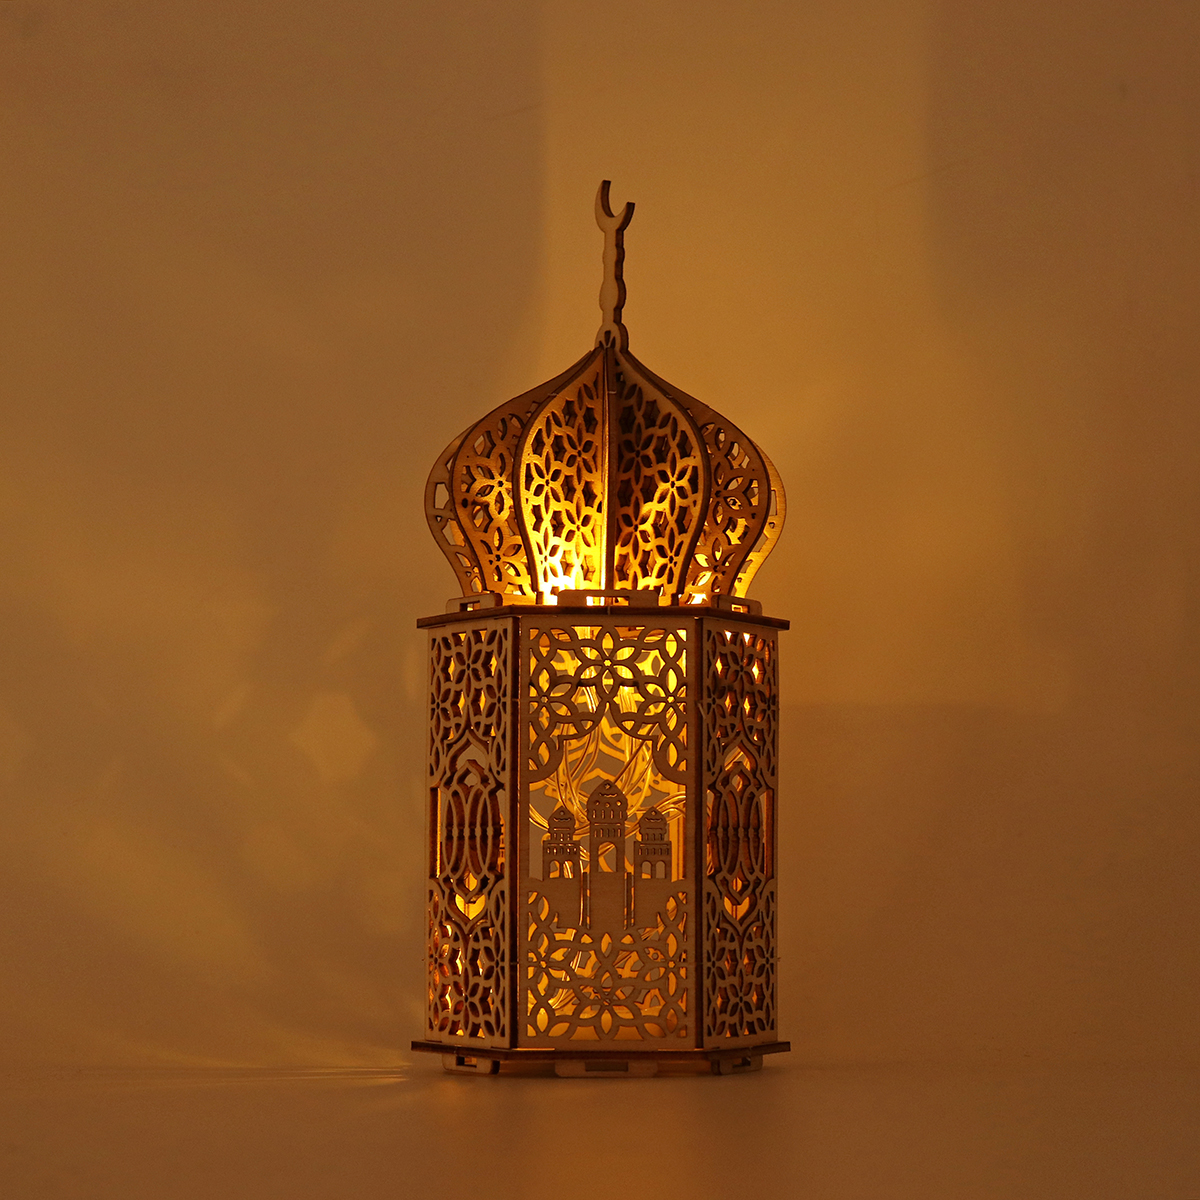 Wooden-Palace-LED-Night-Light-DIY-Eid-Mubarak-Ramadan-Party-Decoration-Ornament-Gifts-1677194-9